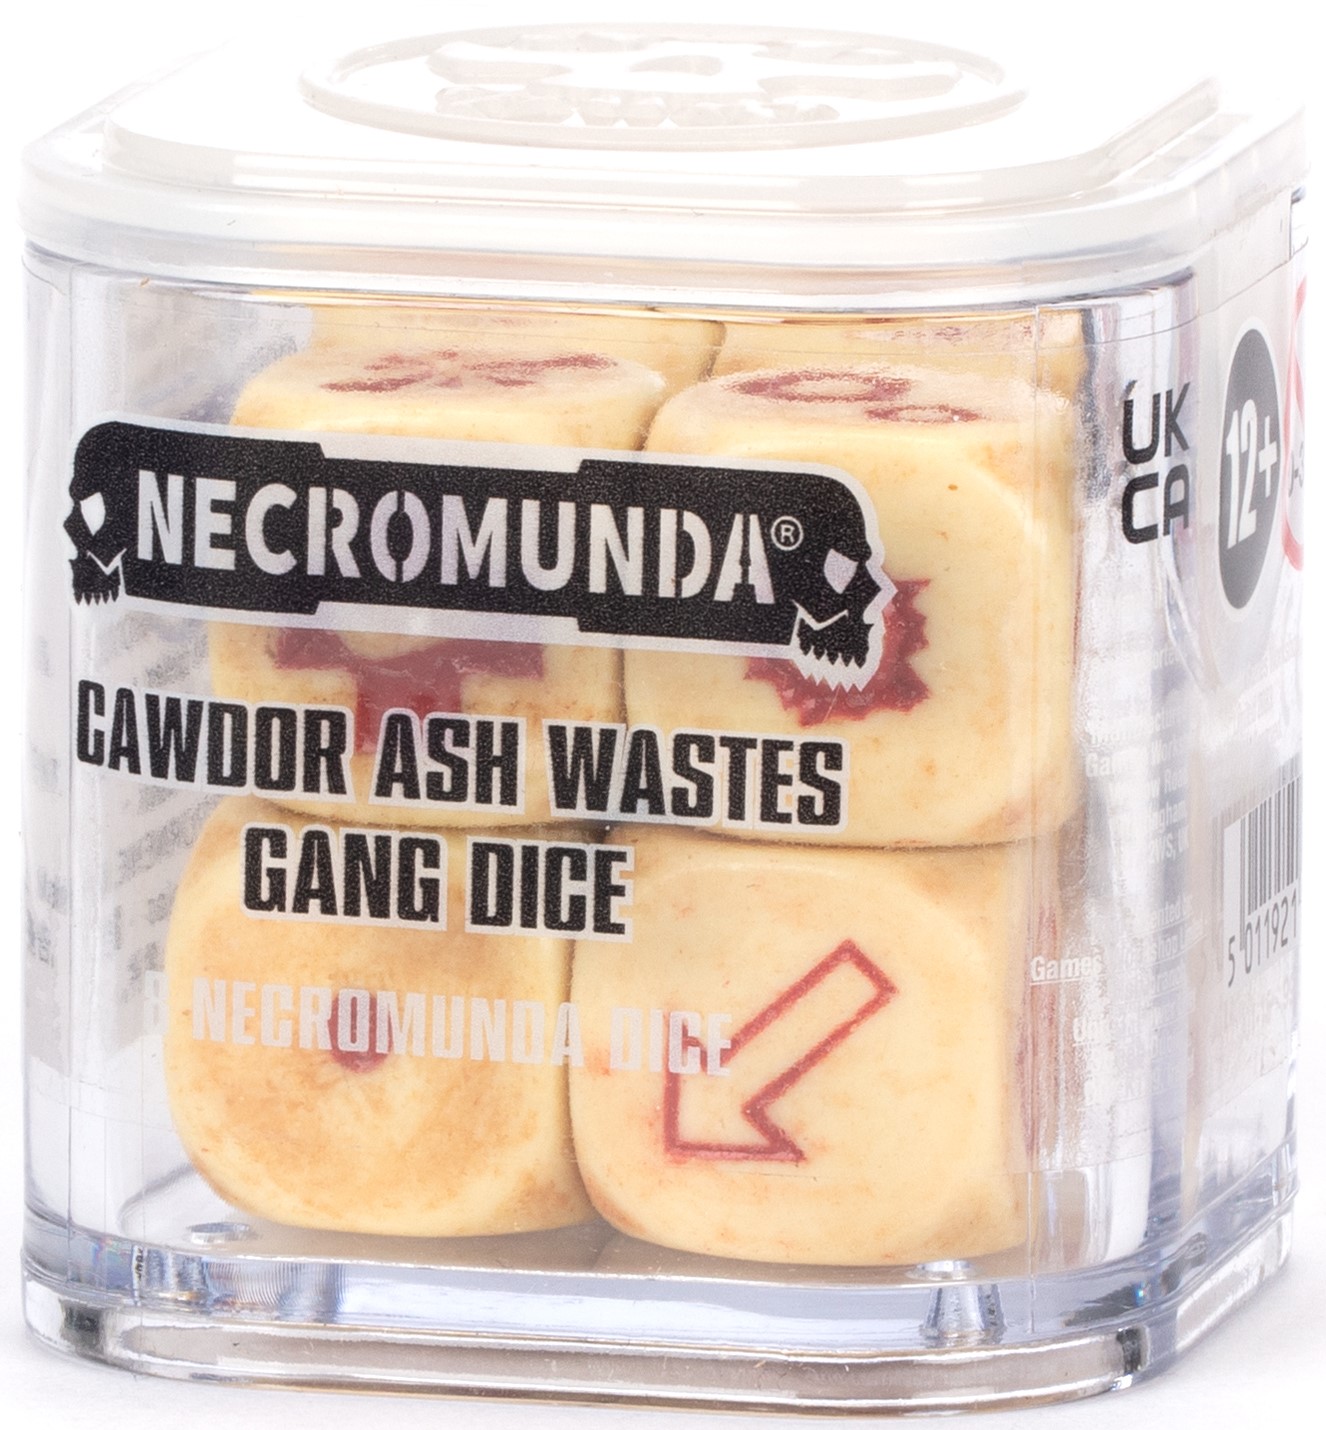 Necromunda: Cawdor Ash Wastes Gang Dice